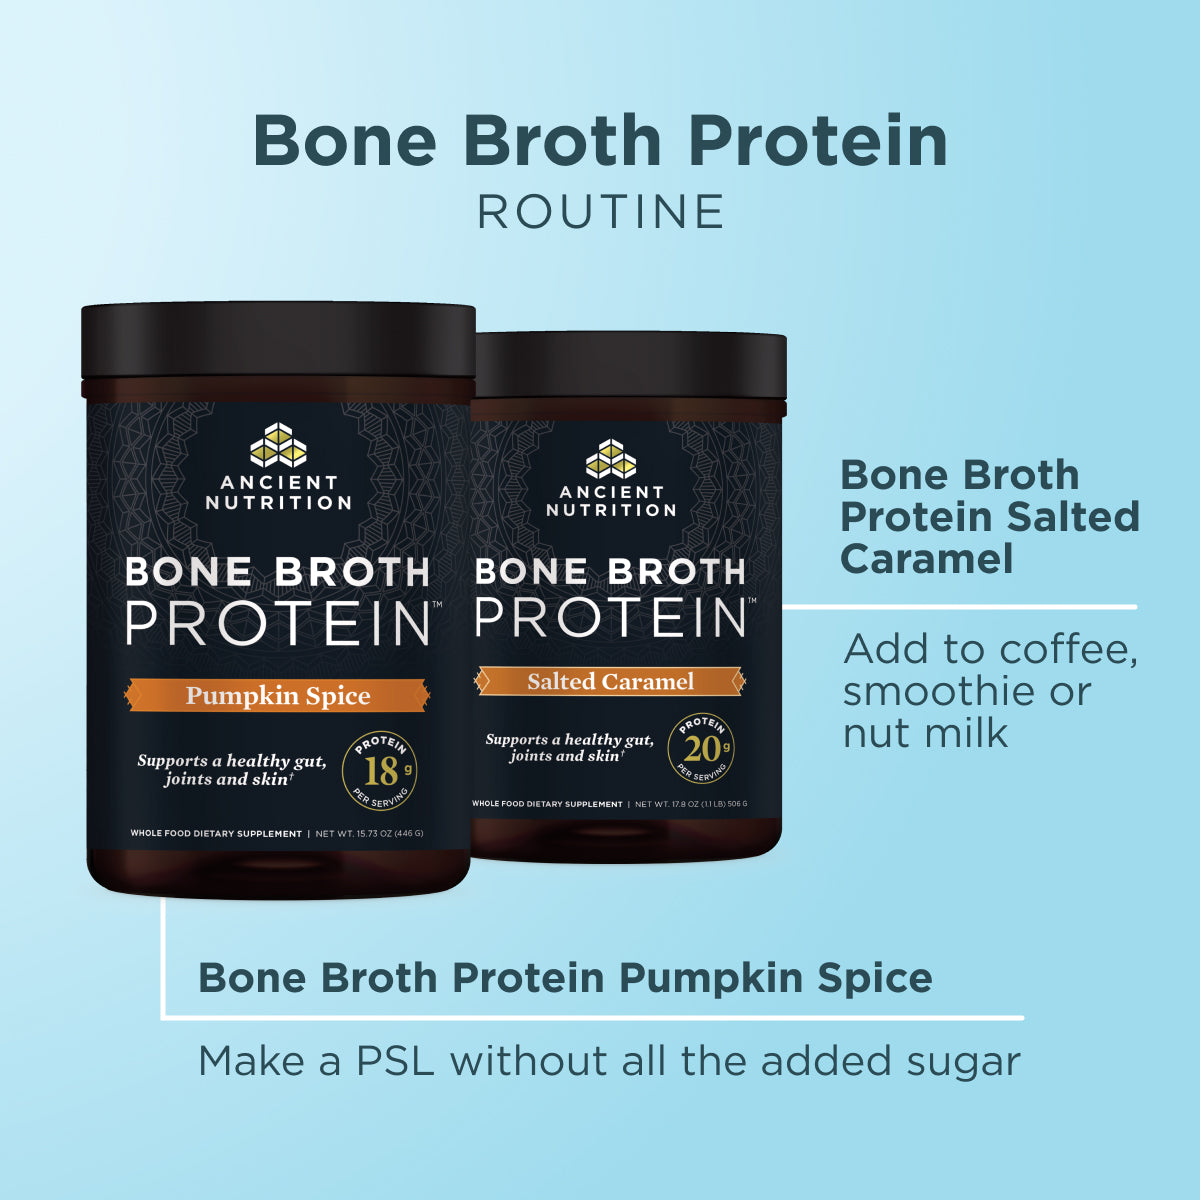 Bone Broth Protein Pumpkin Spice + Salted Caramel Combo routine